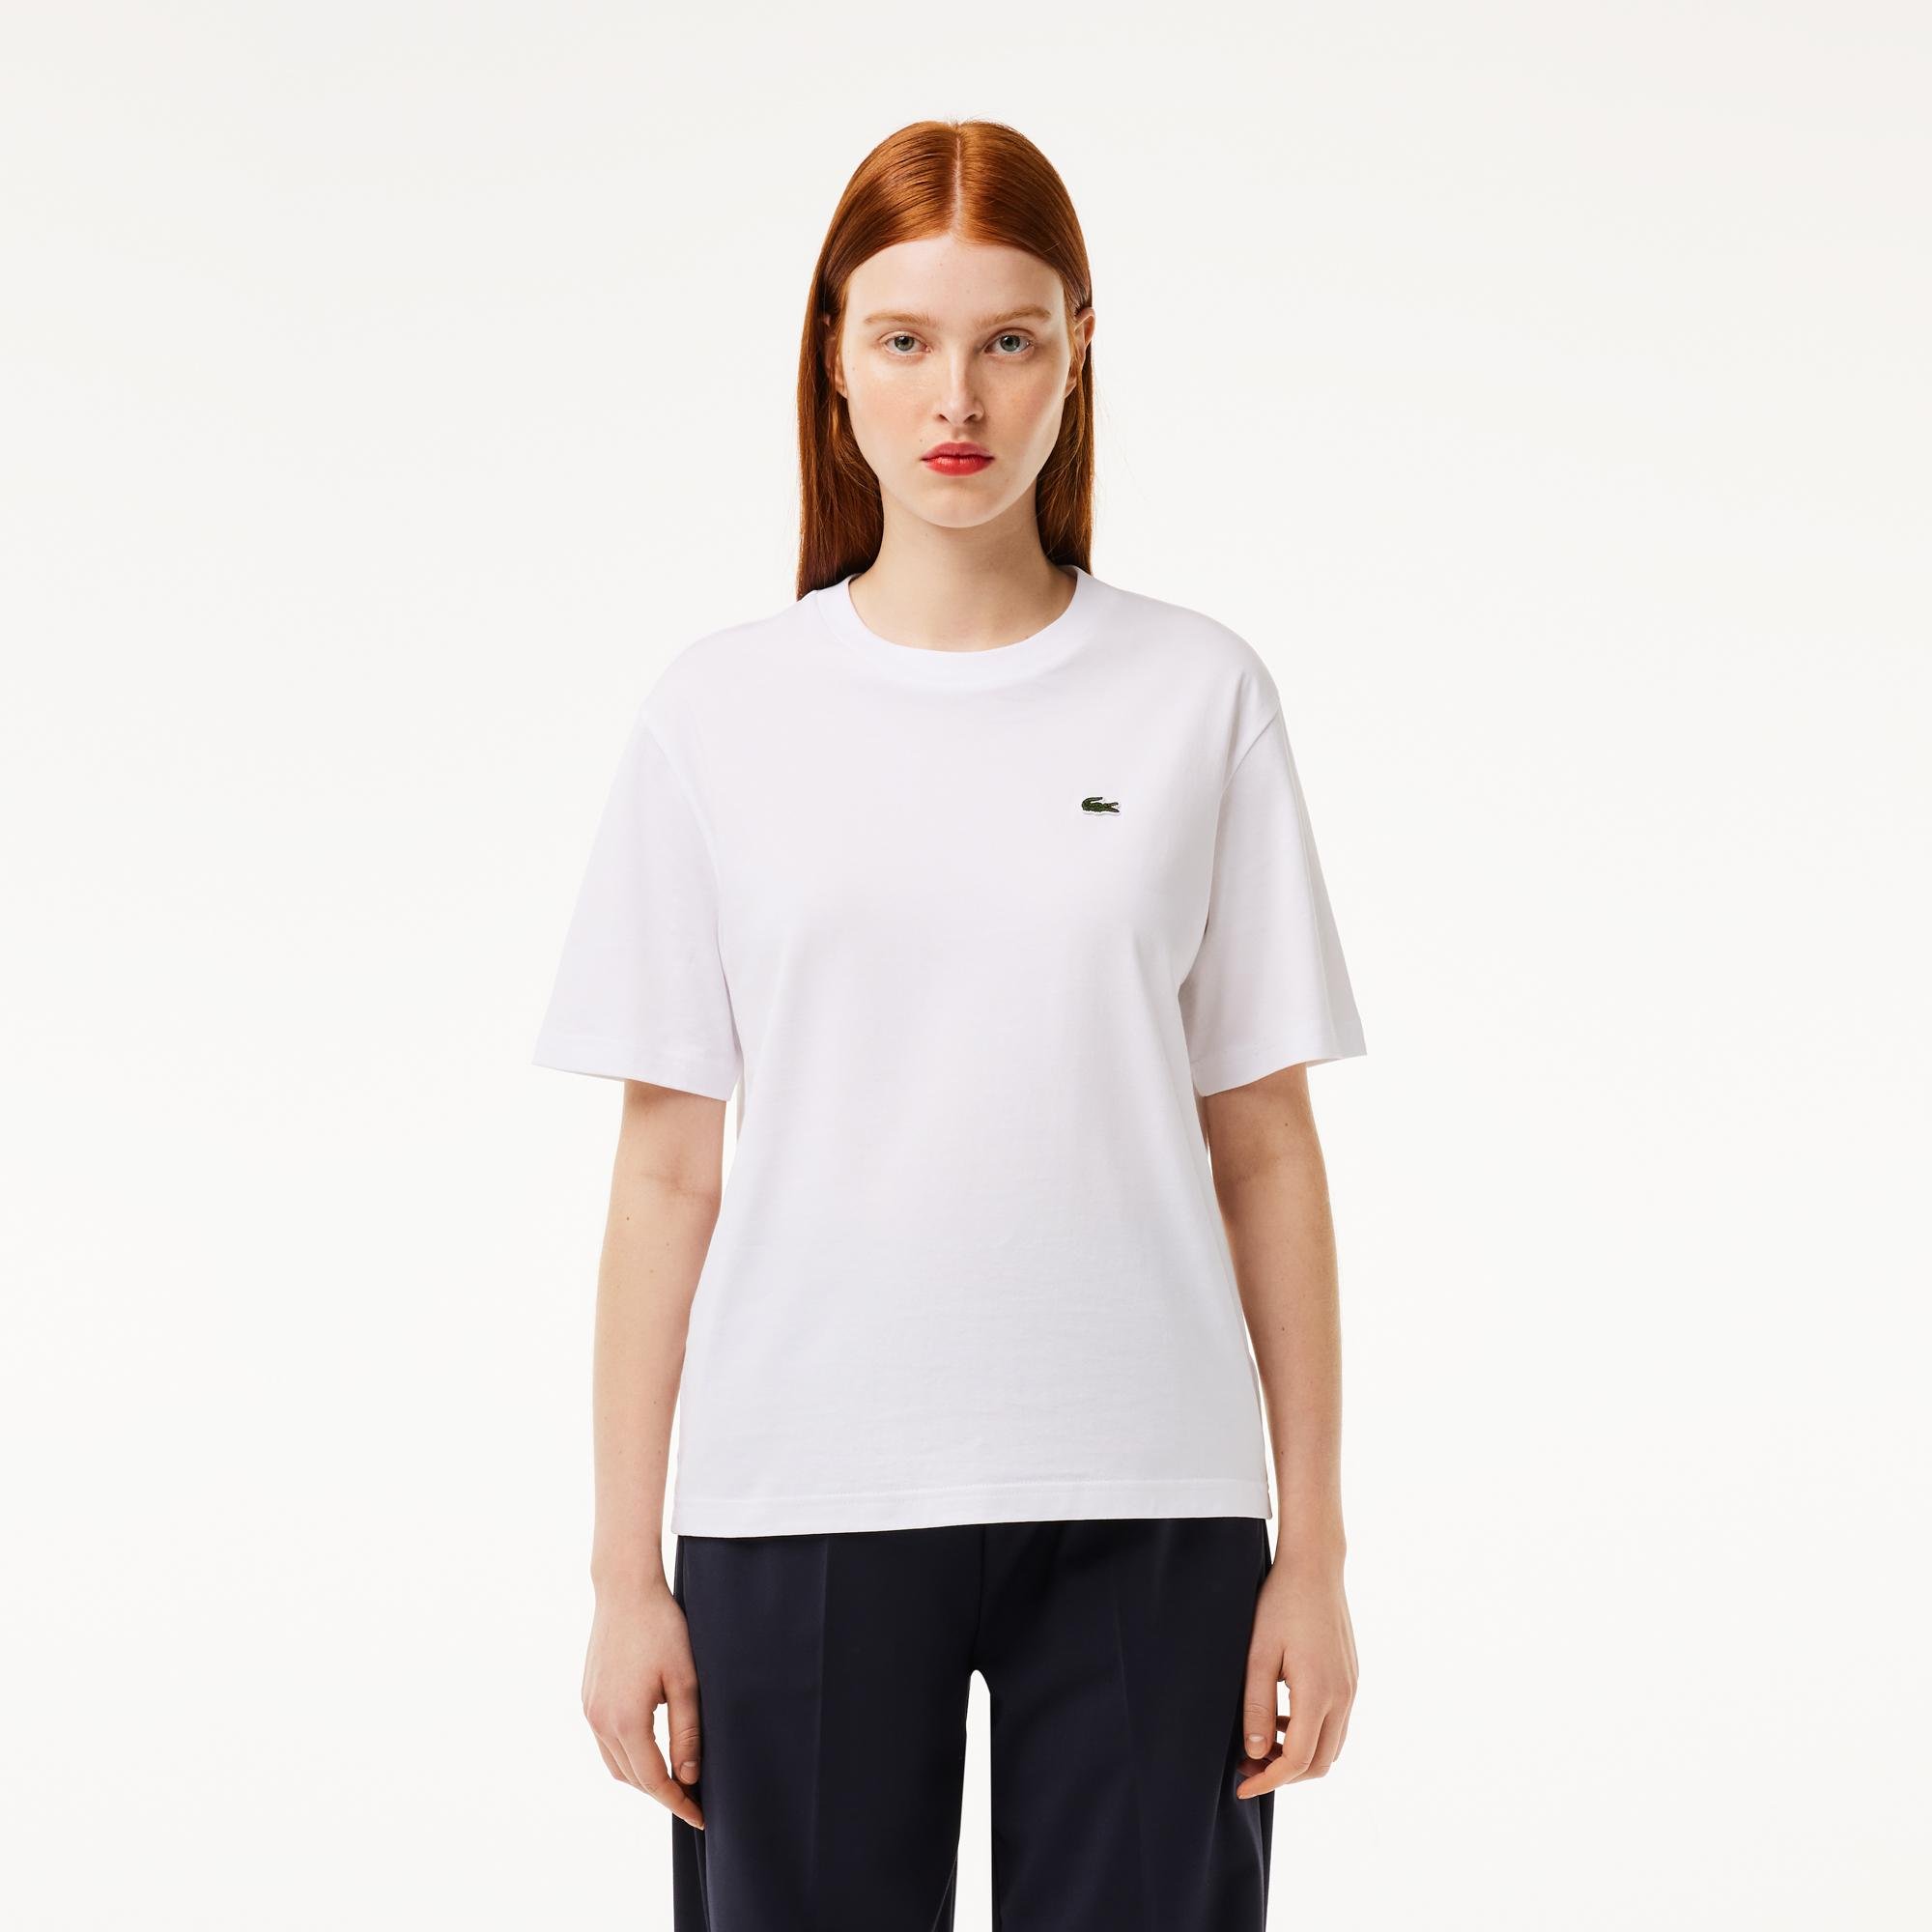 Lacoste Women's Relaxed Fit Lightweight Cotton Pima Jersey T-shirt